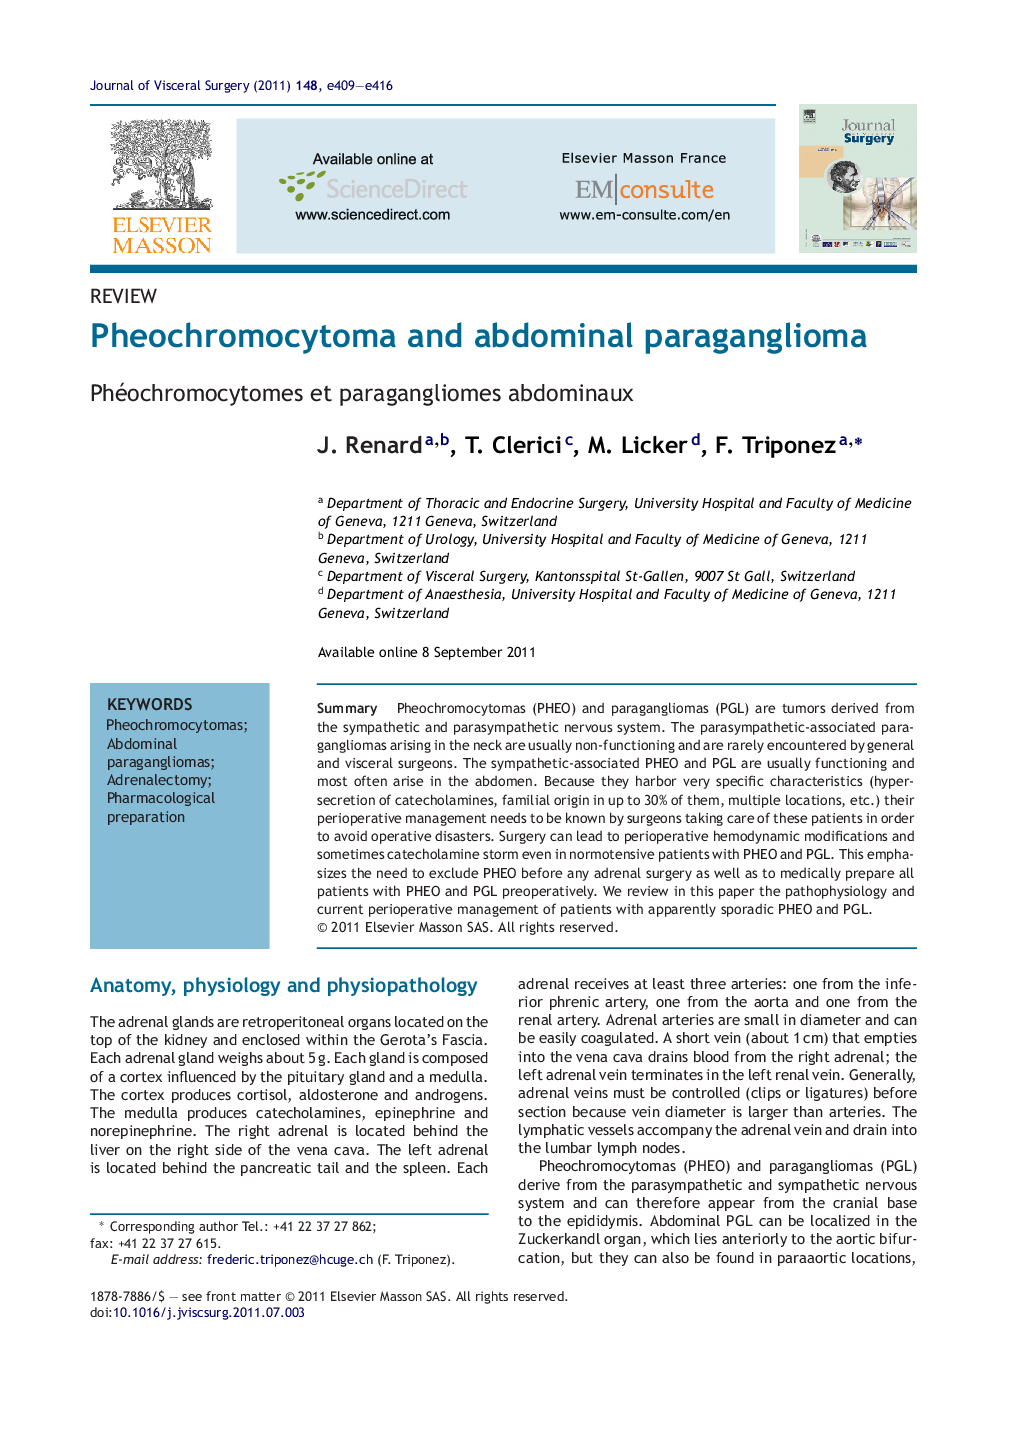 Pheochromocytoma and abdominal paraganglioma